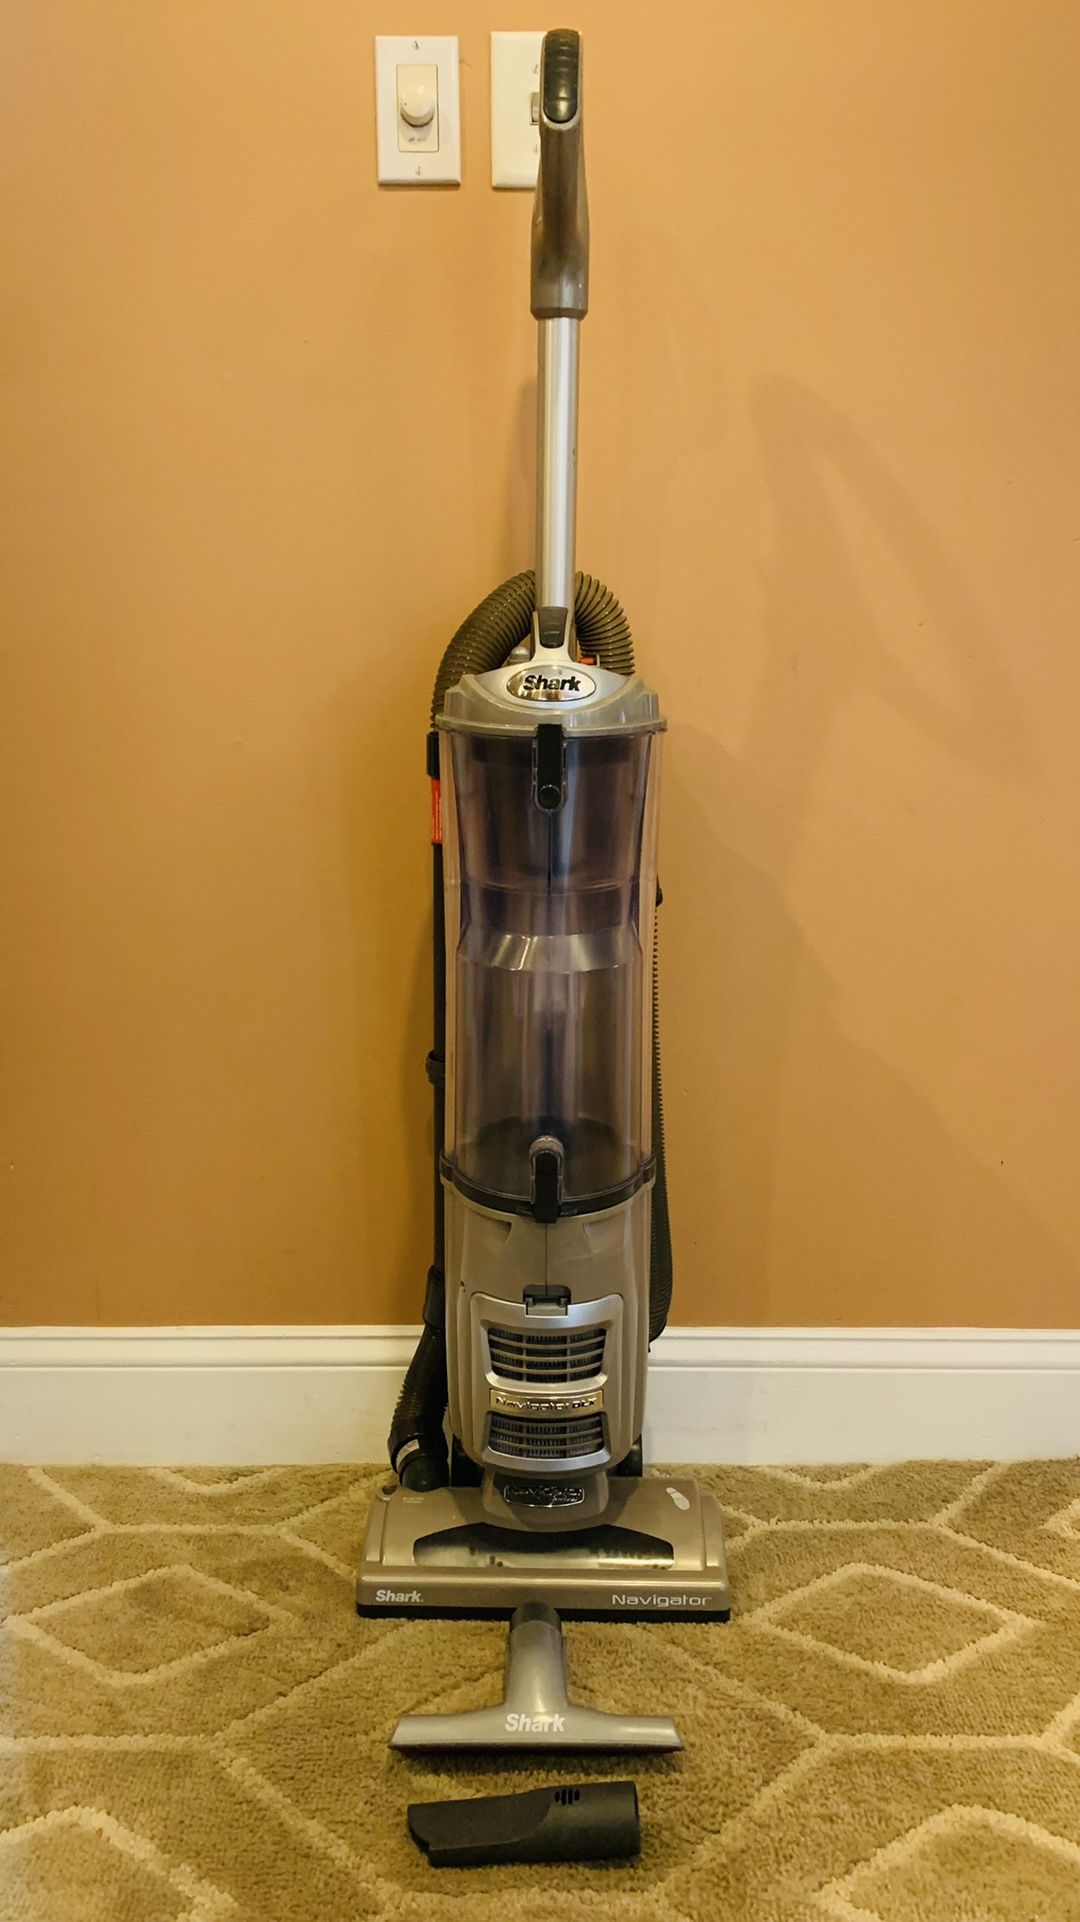 Shark navigator vacuum cleaner